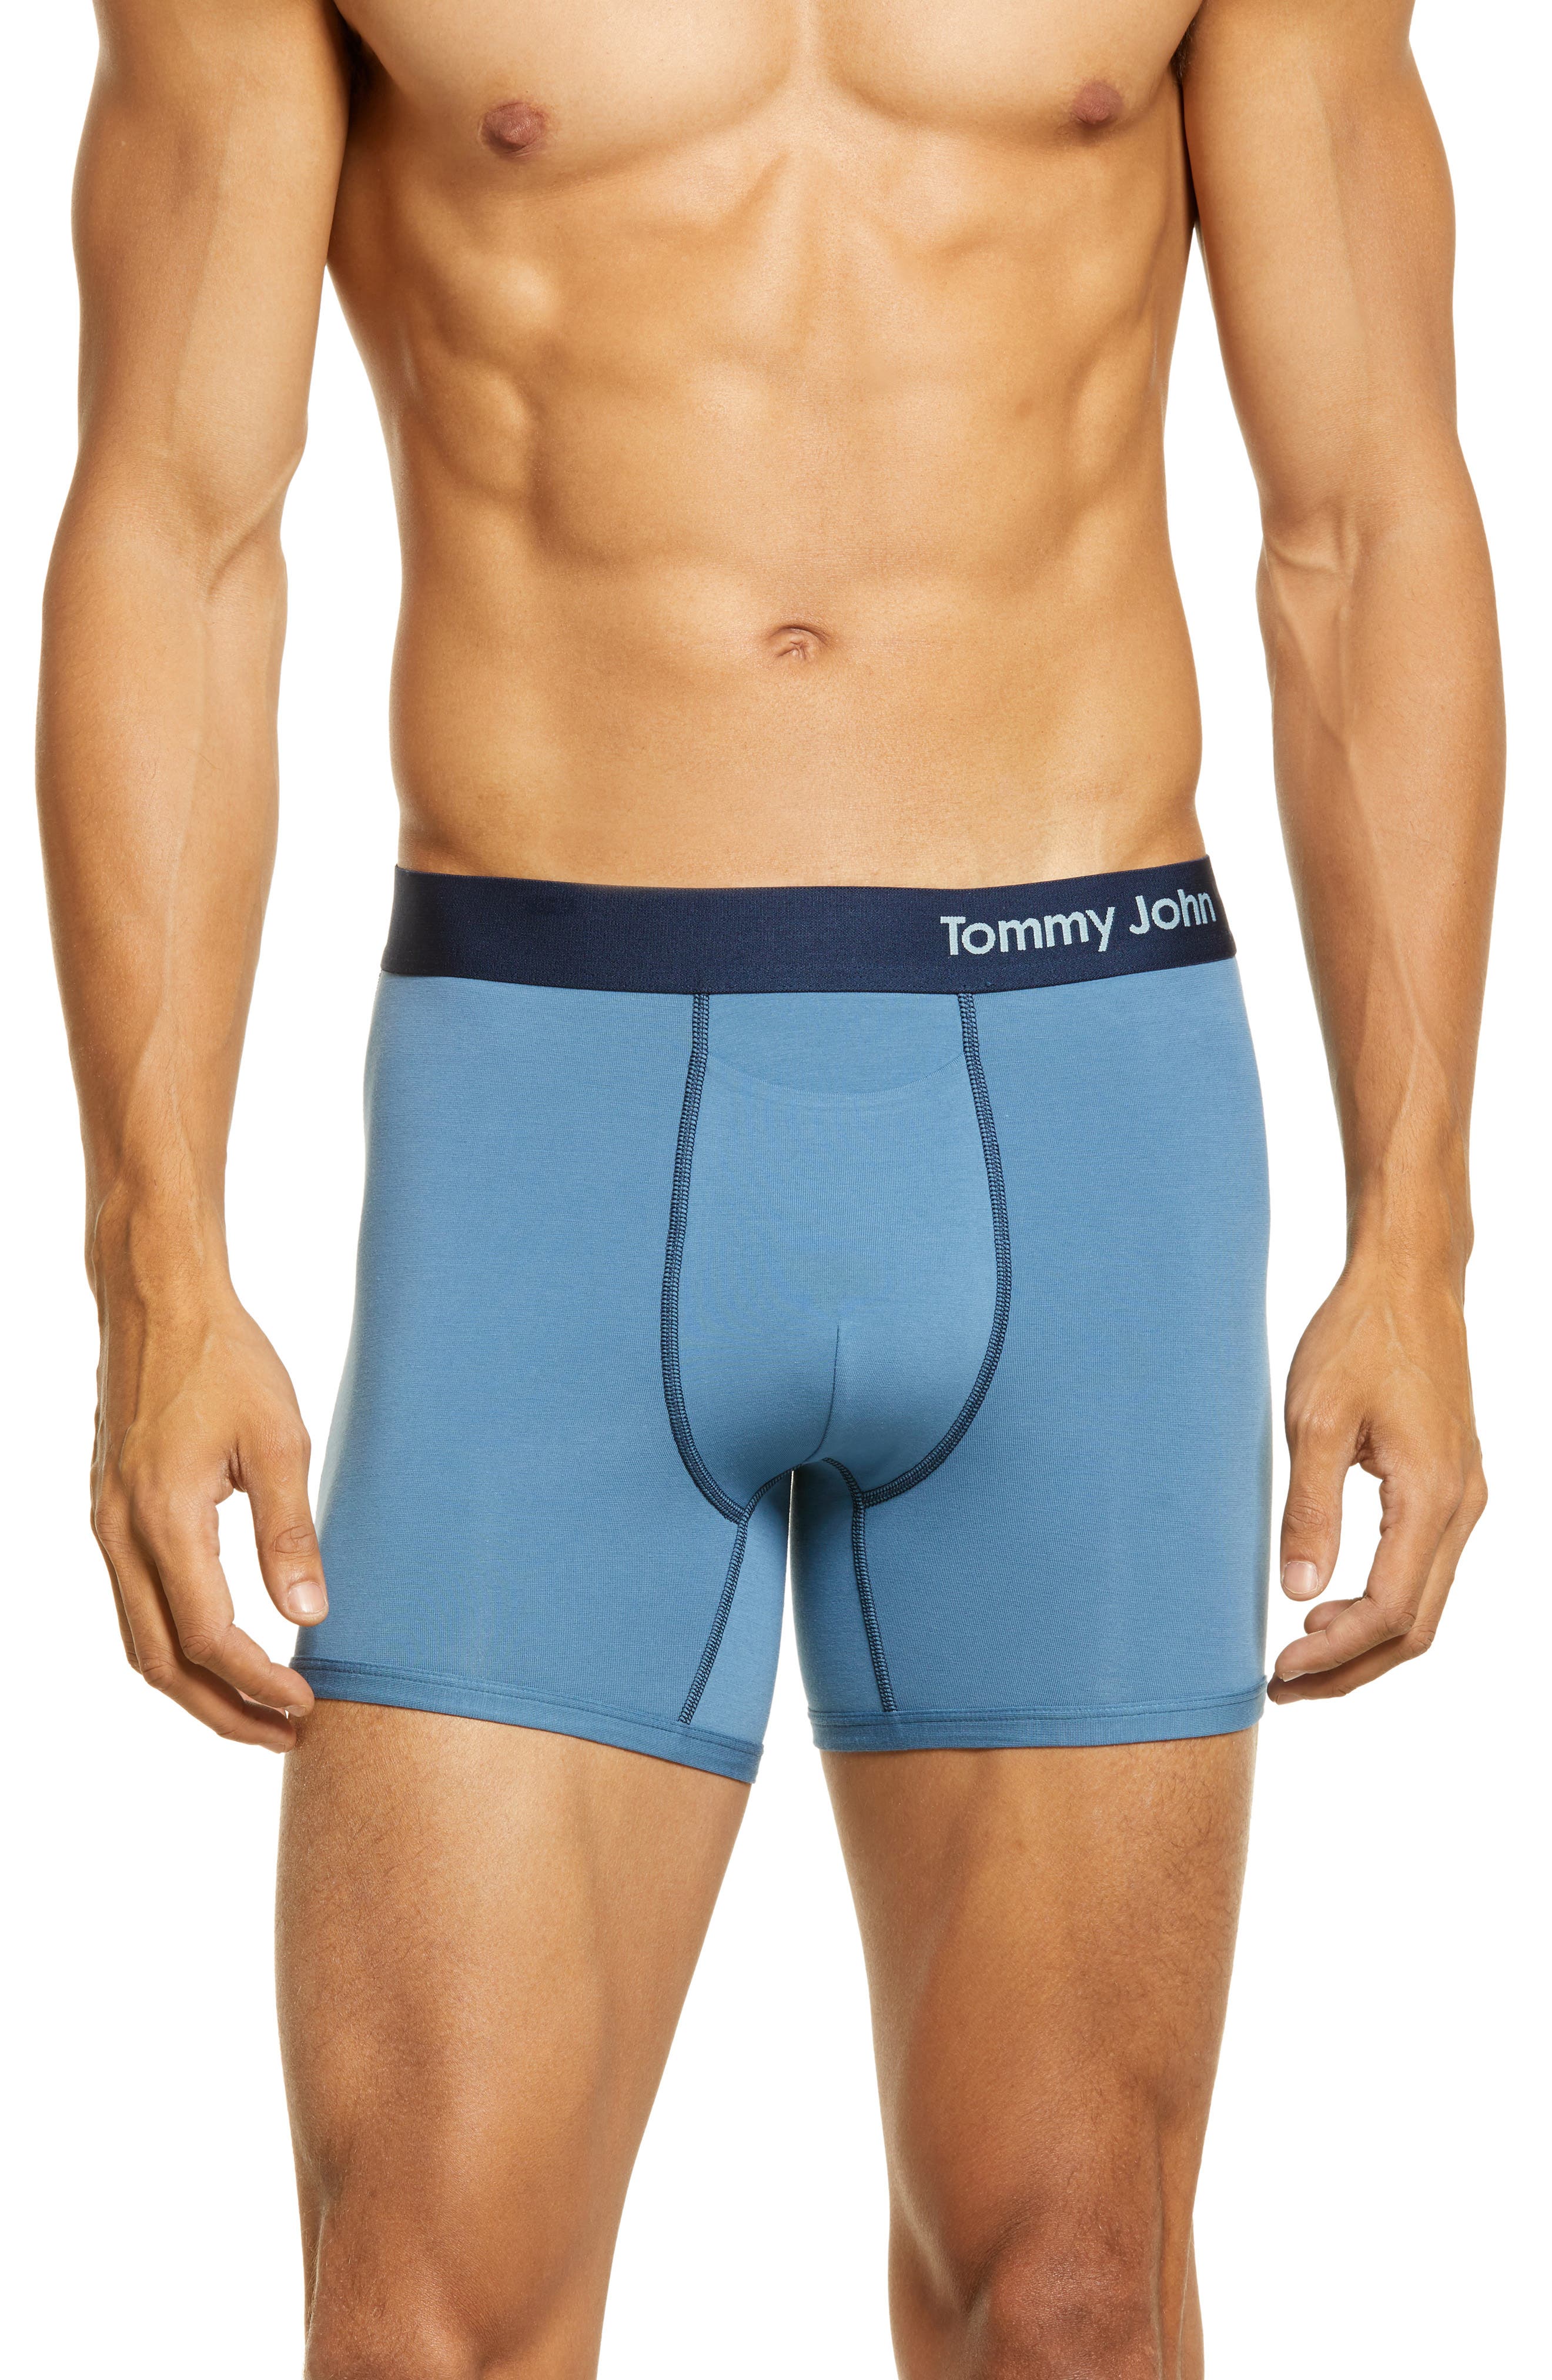 nordstrom tommy john underwear